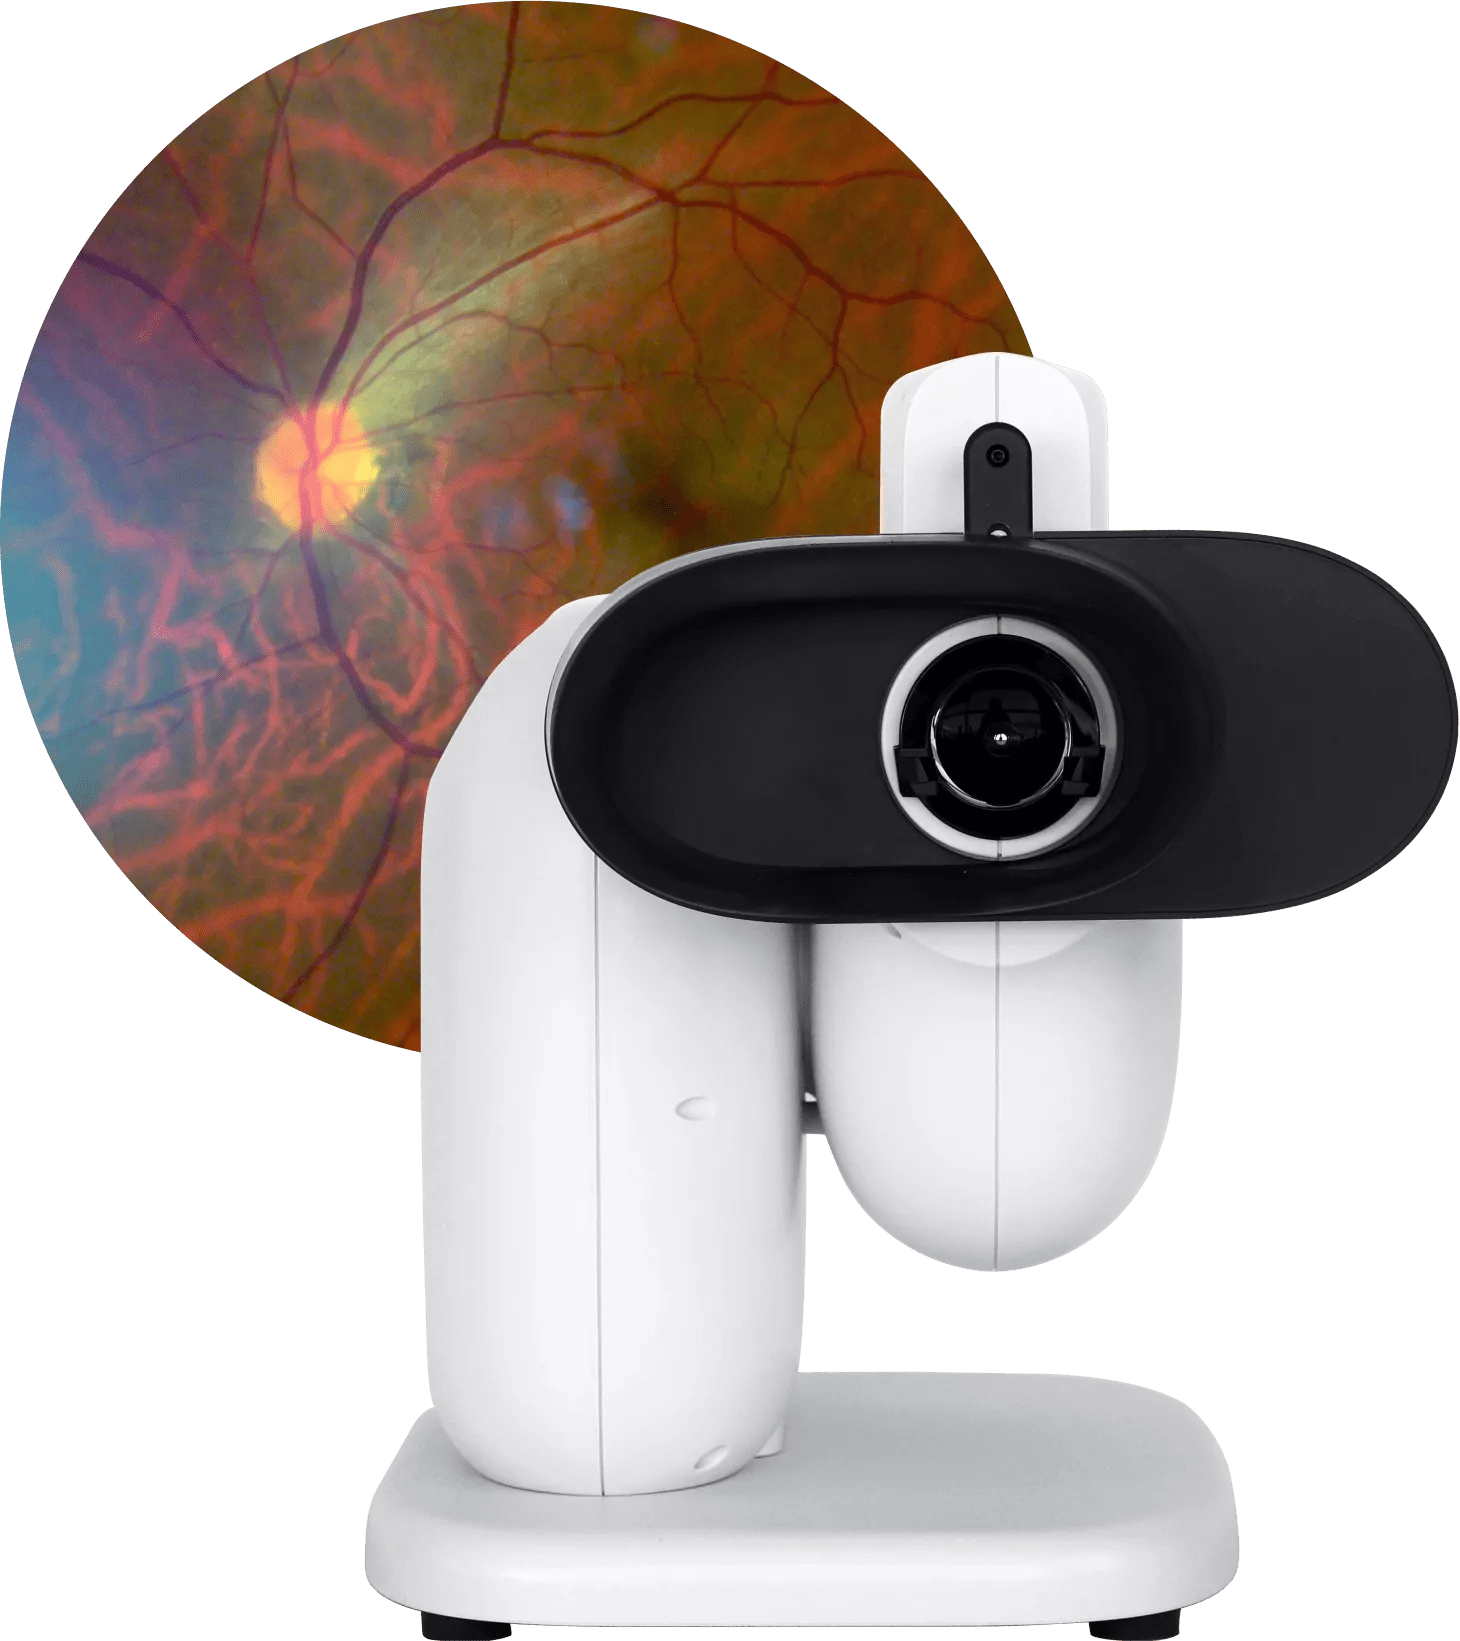 Retinal service camera and retina scan